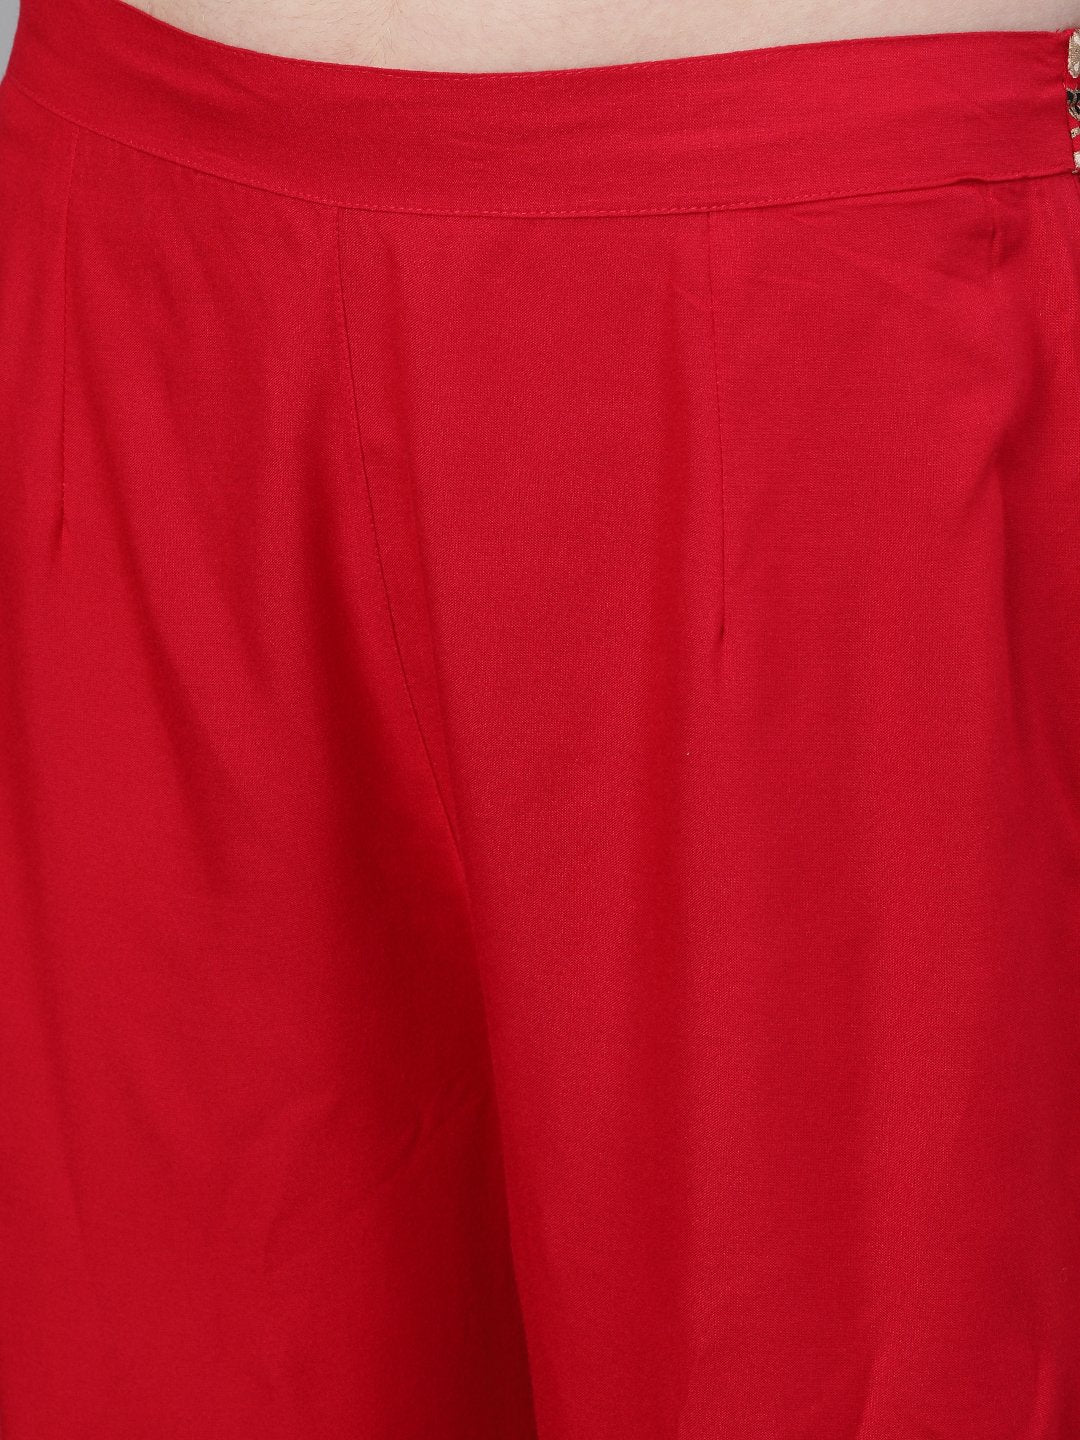 Ishin Women's Rayon Black & Red Sequinned Foil Printed Straight Kurta Palazzo Set